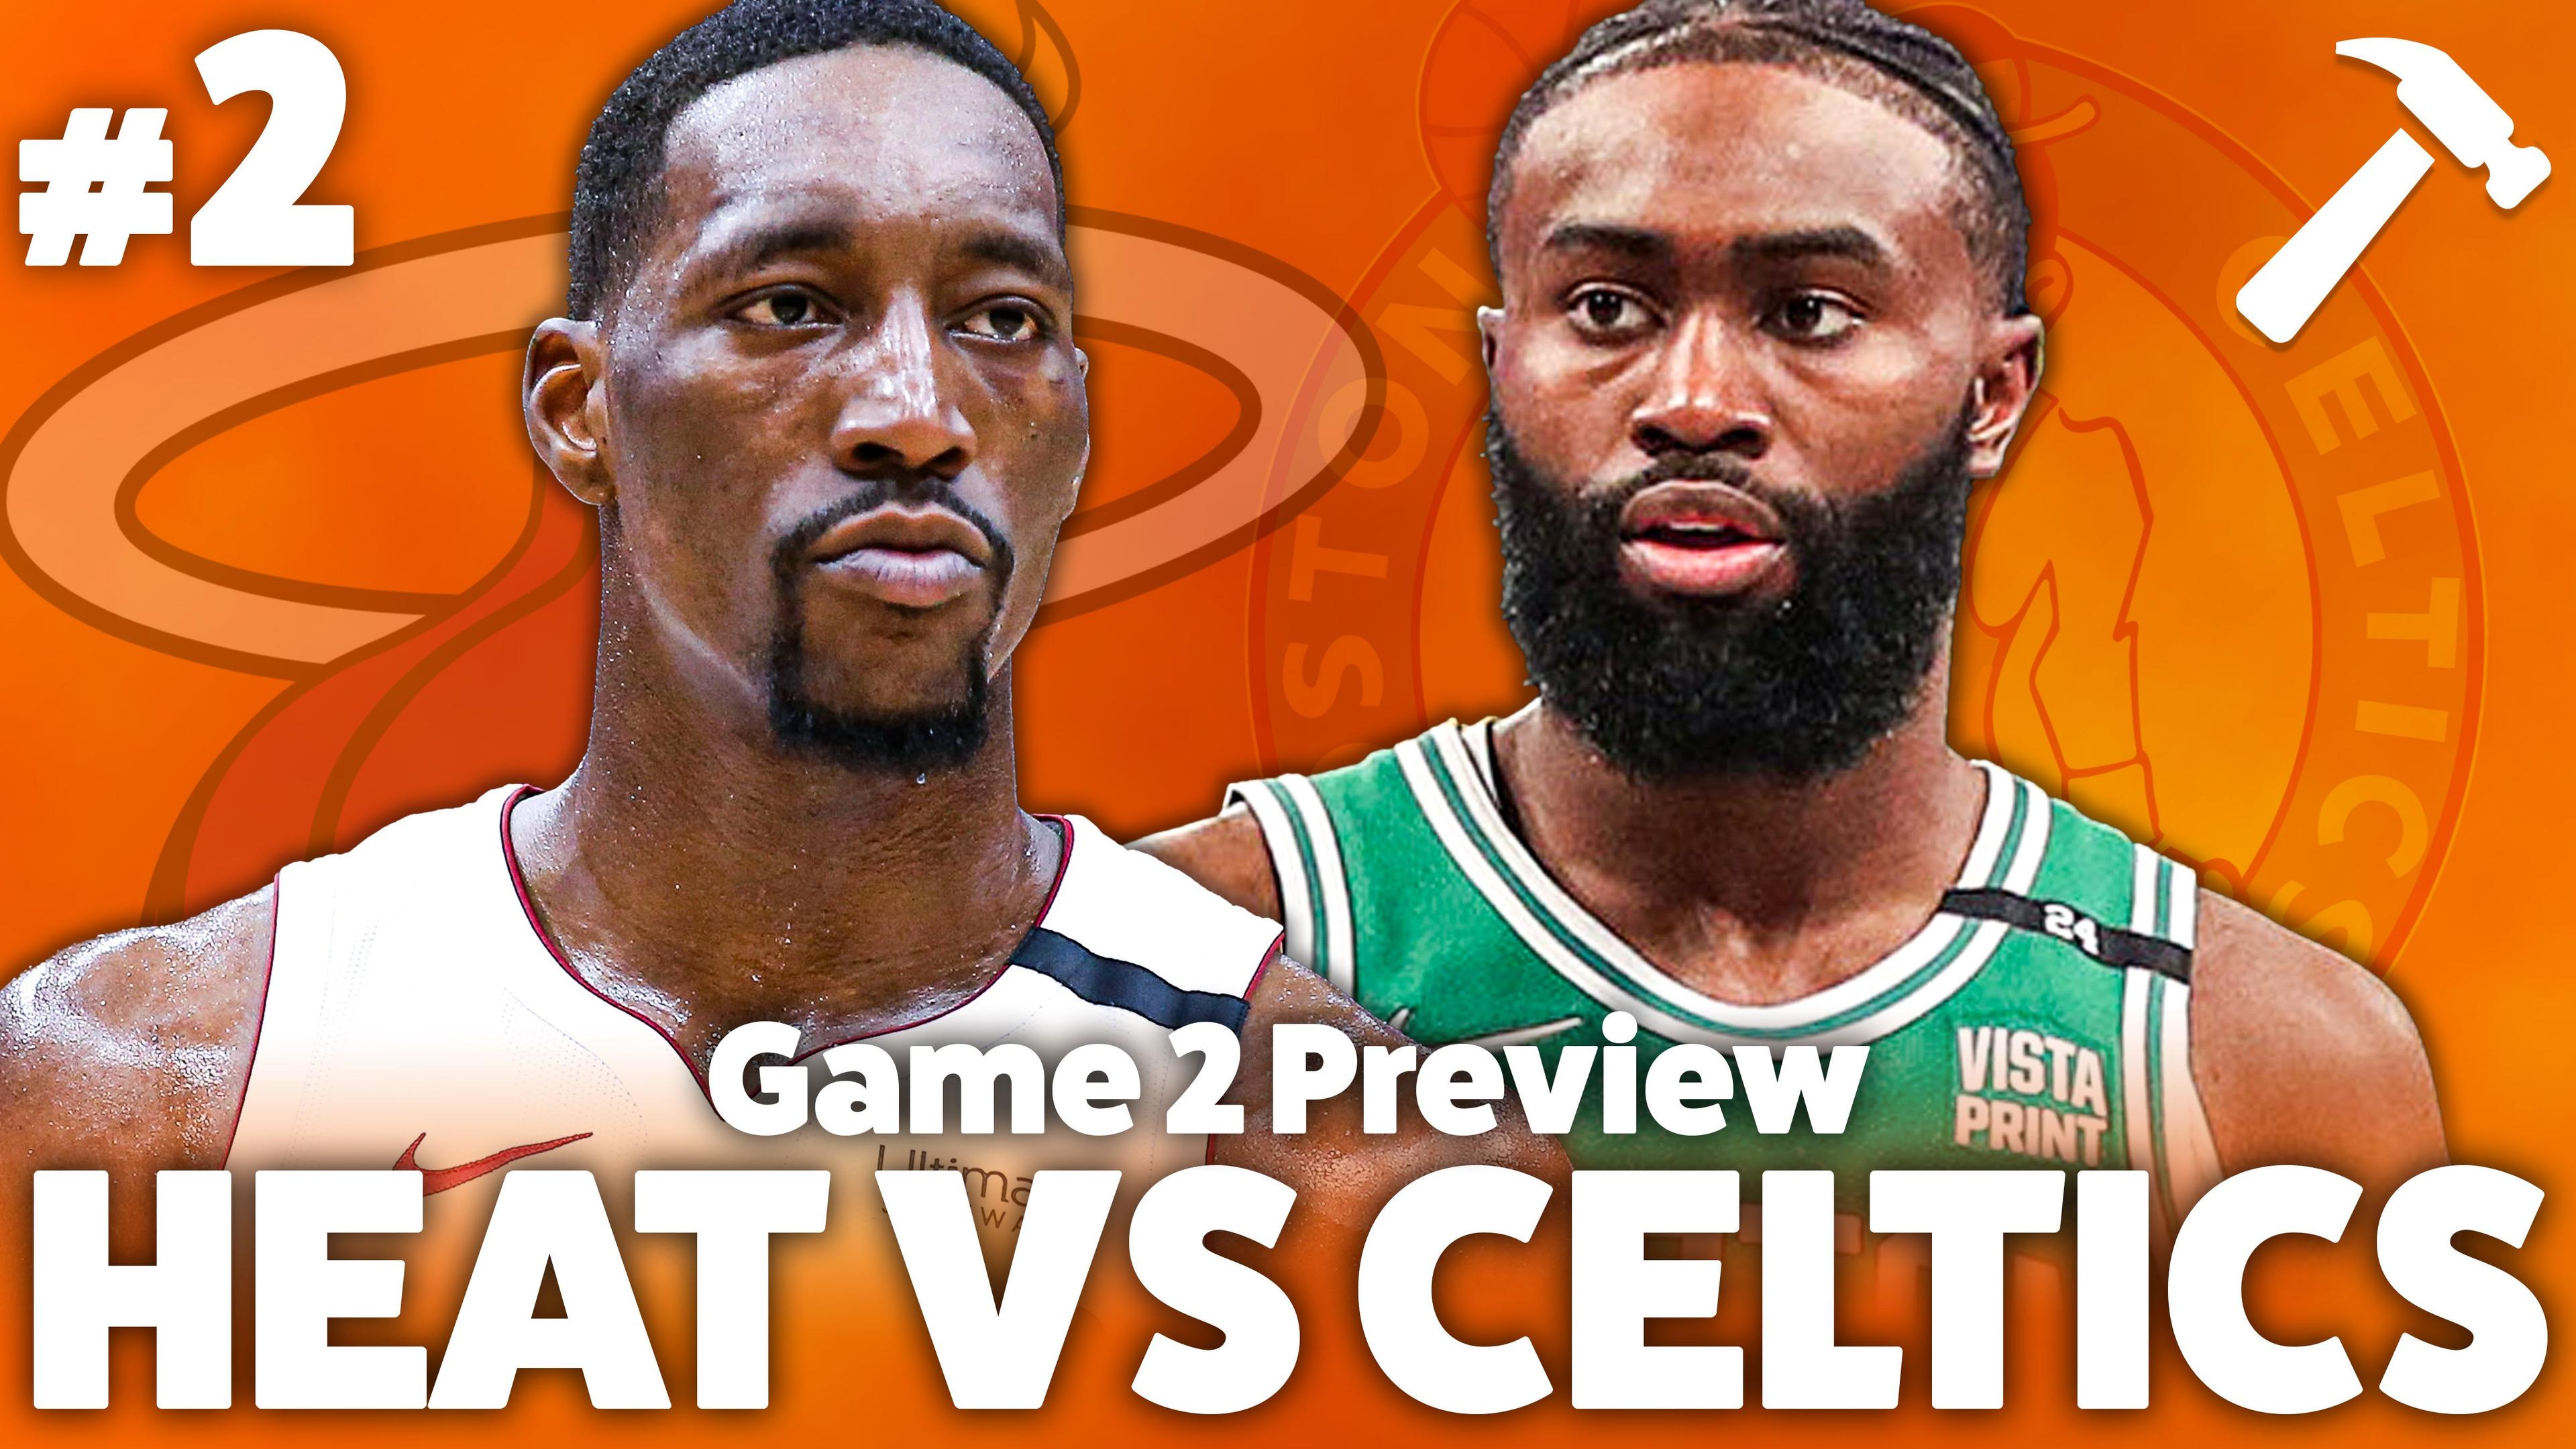 Heat vs Celtics Game 2 Preview.jpg